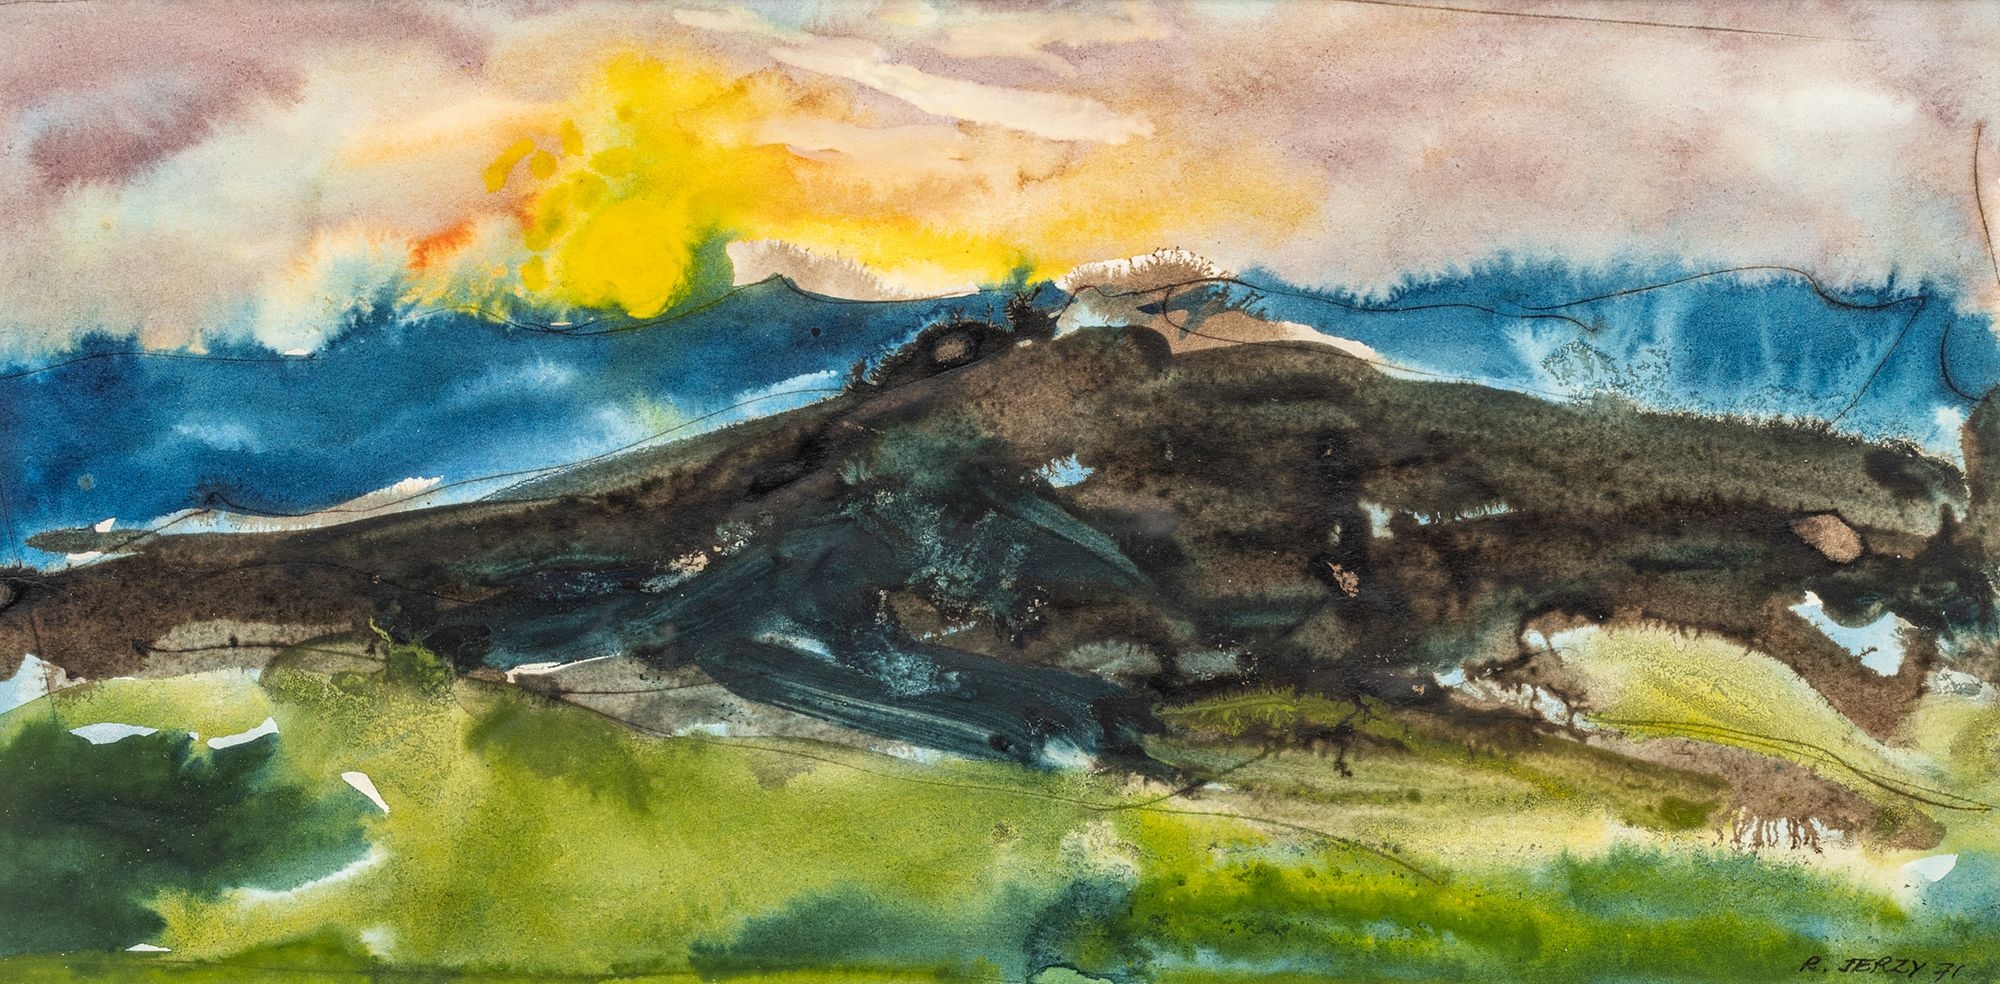 Richard Jerzy (American, 1943-2001) Watercolor on Paper, Landscape at Dusk, 1971, H 5.5" W 11.25 by Richard Jerzy, 1971